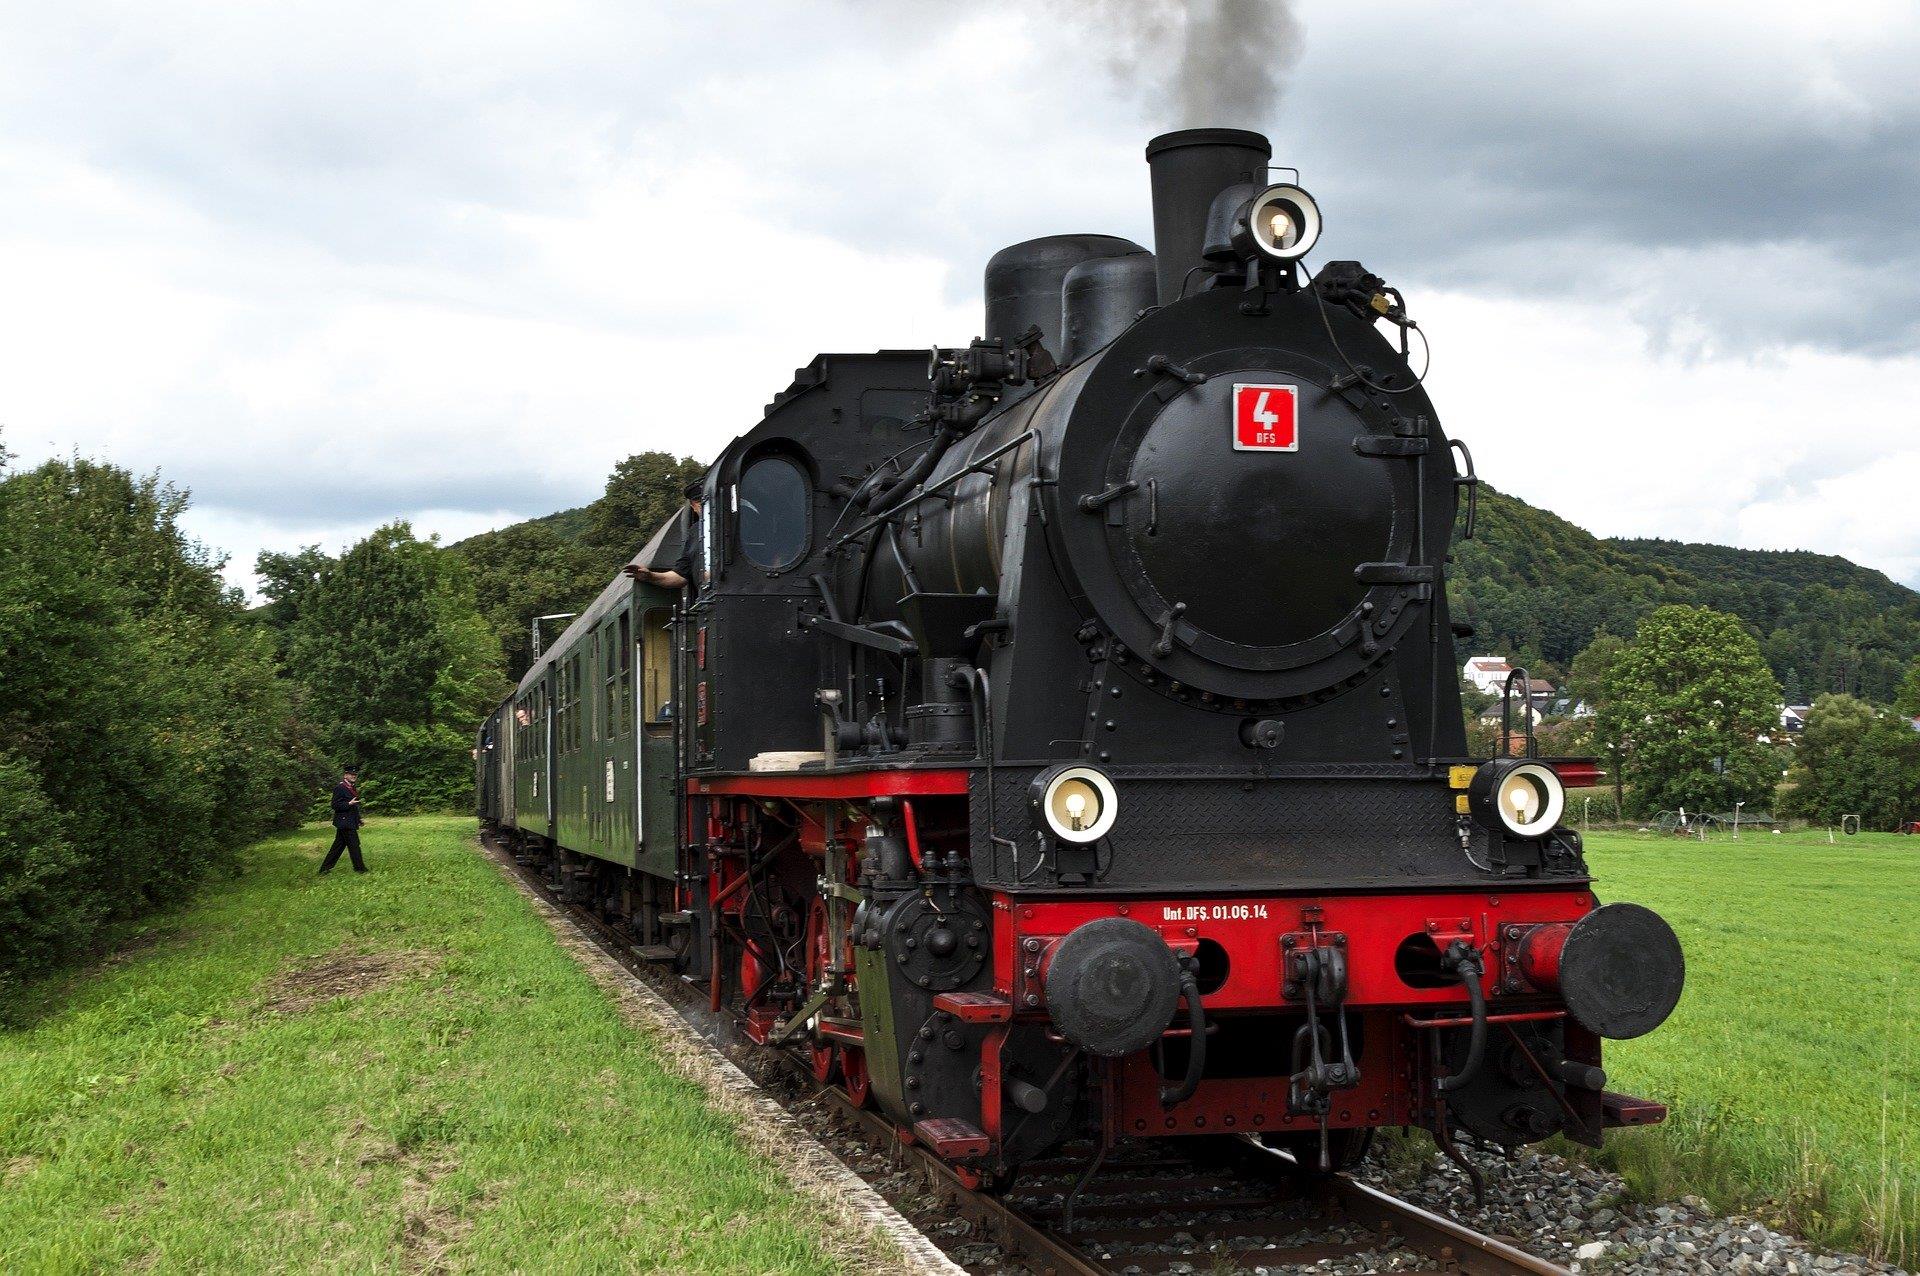 The Essex Steam Train